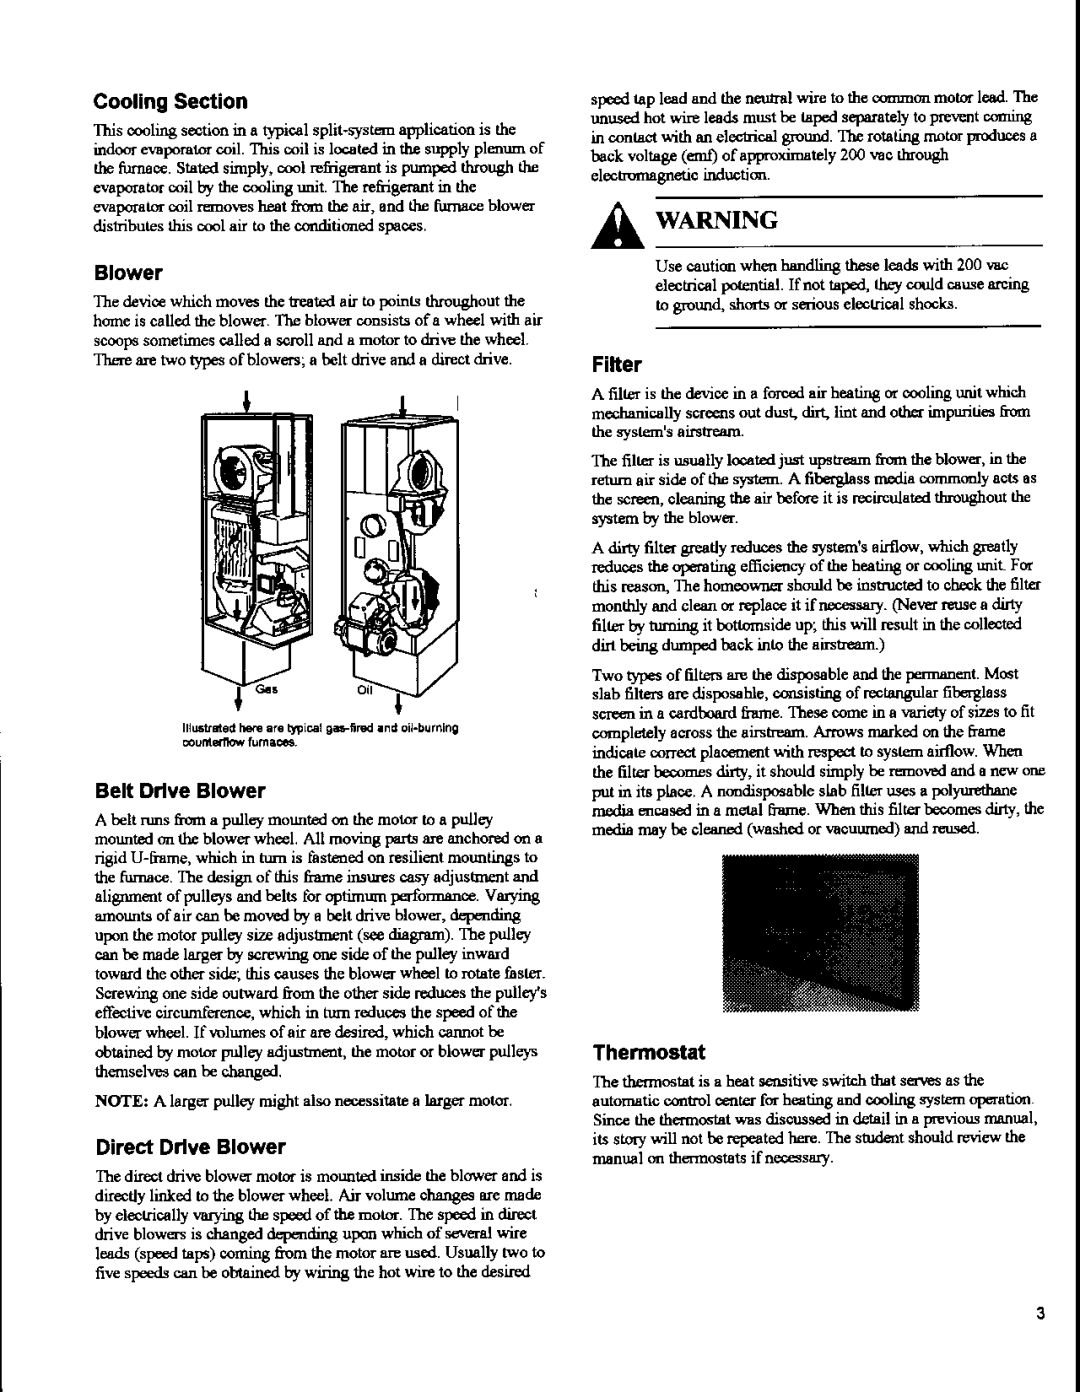 Bard 2100-066 Rev. A manual 